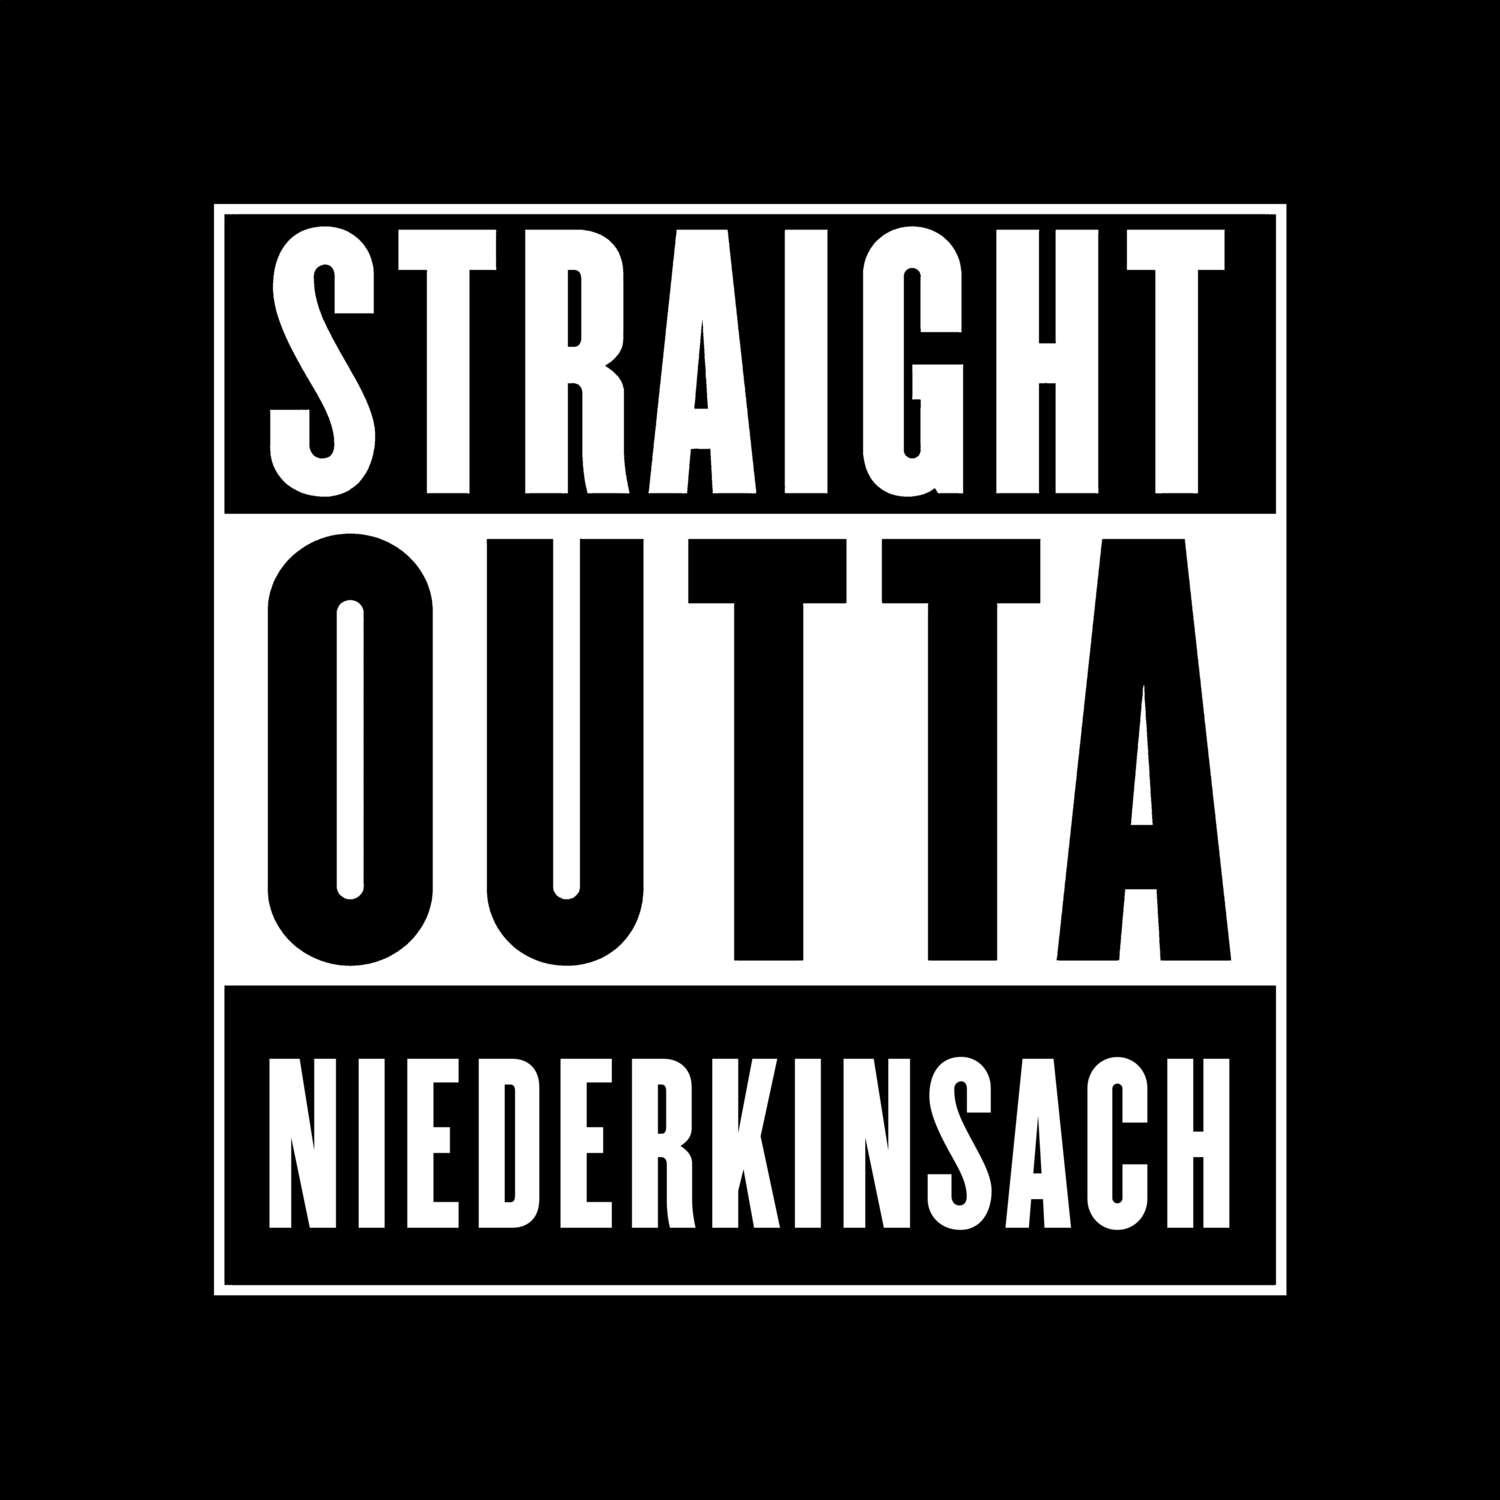 Niederkinsach T-Shirt »Straight Outta«